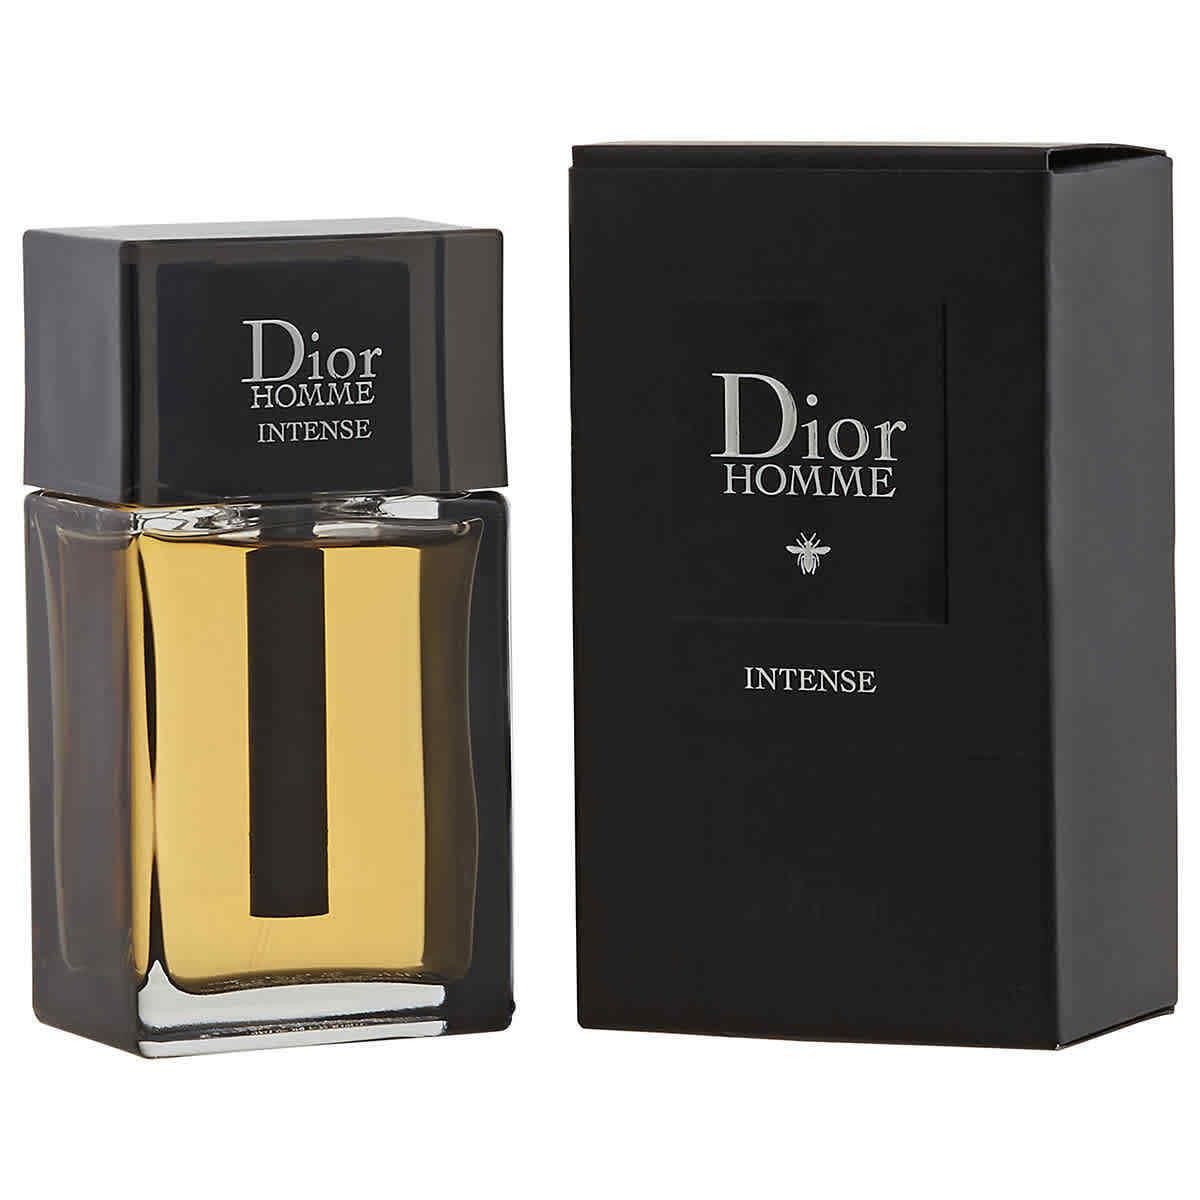 Dior Homme Intense / Christian Dior Edp Spray 1.7 oz m